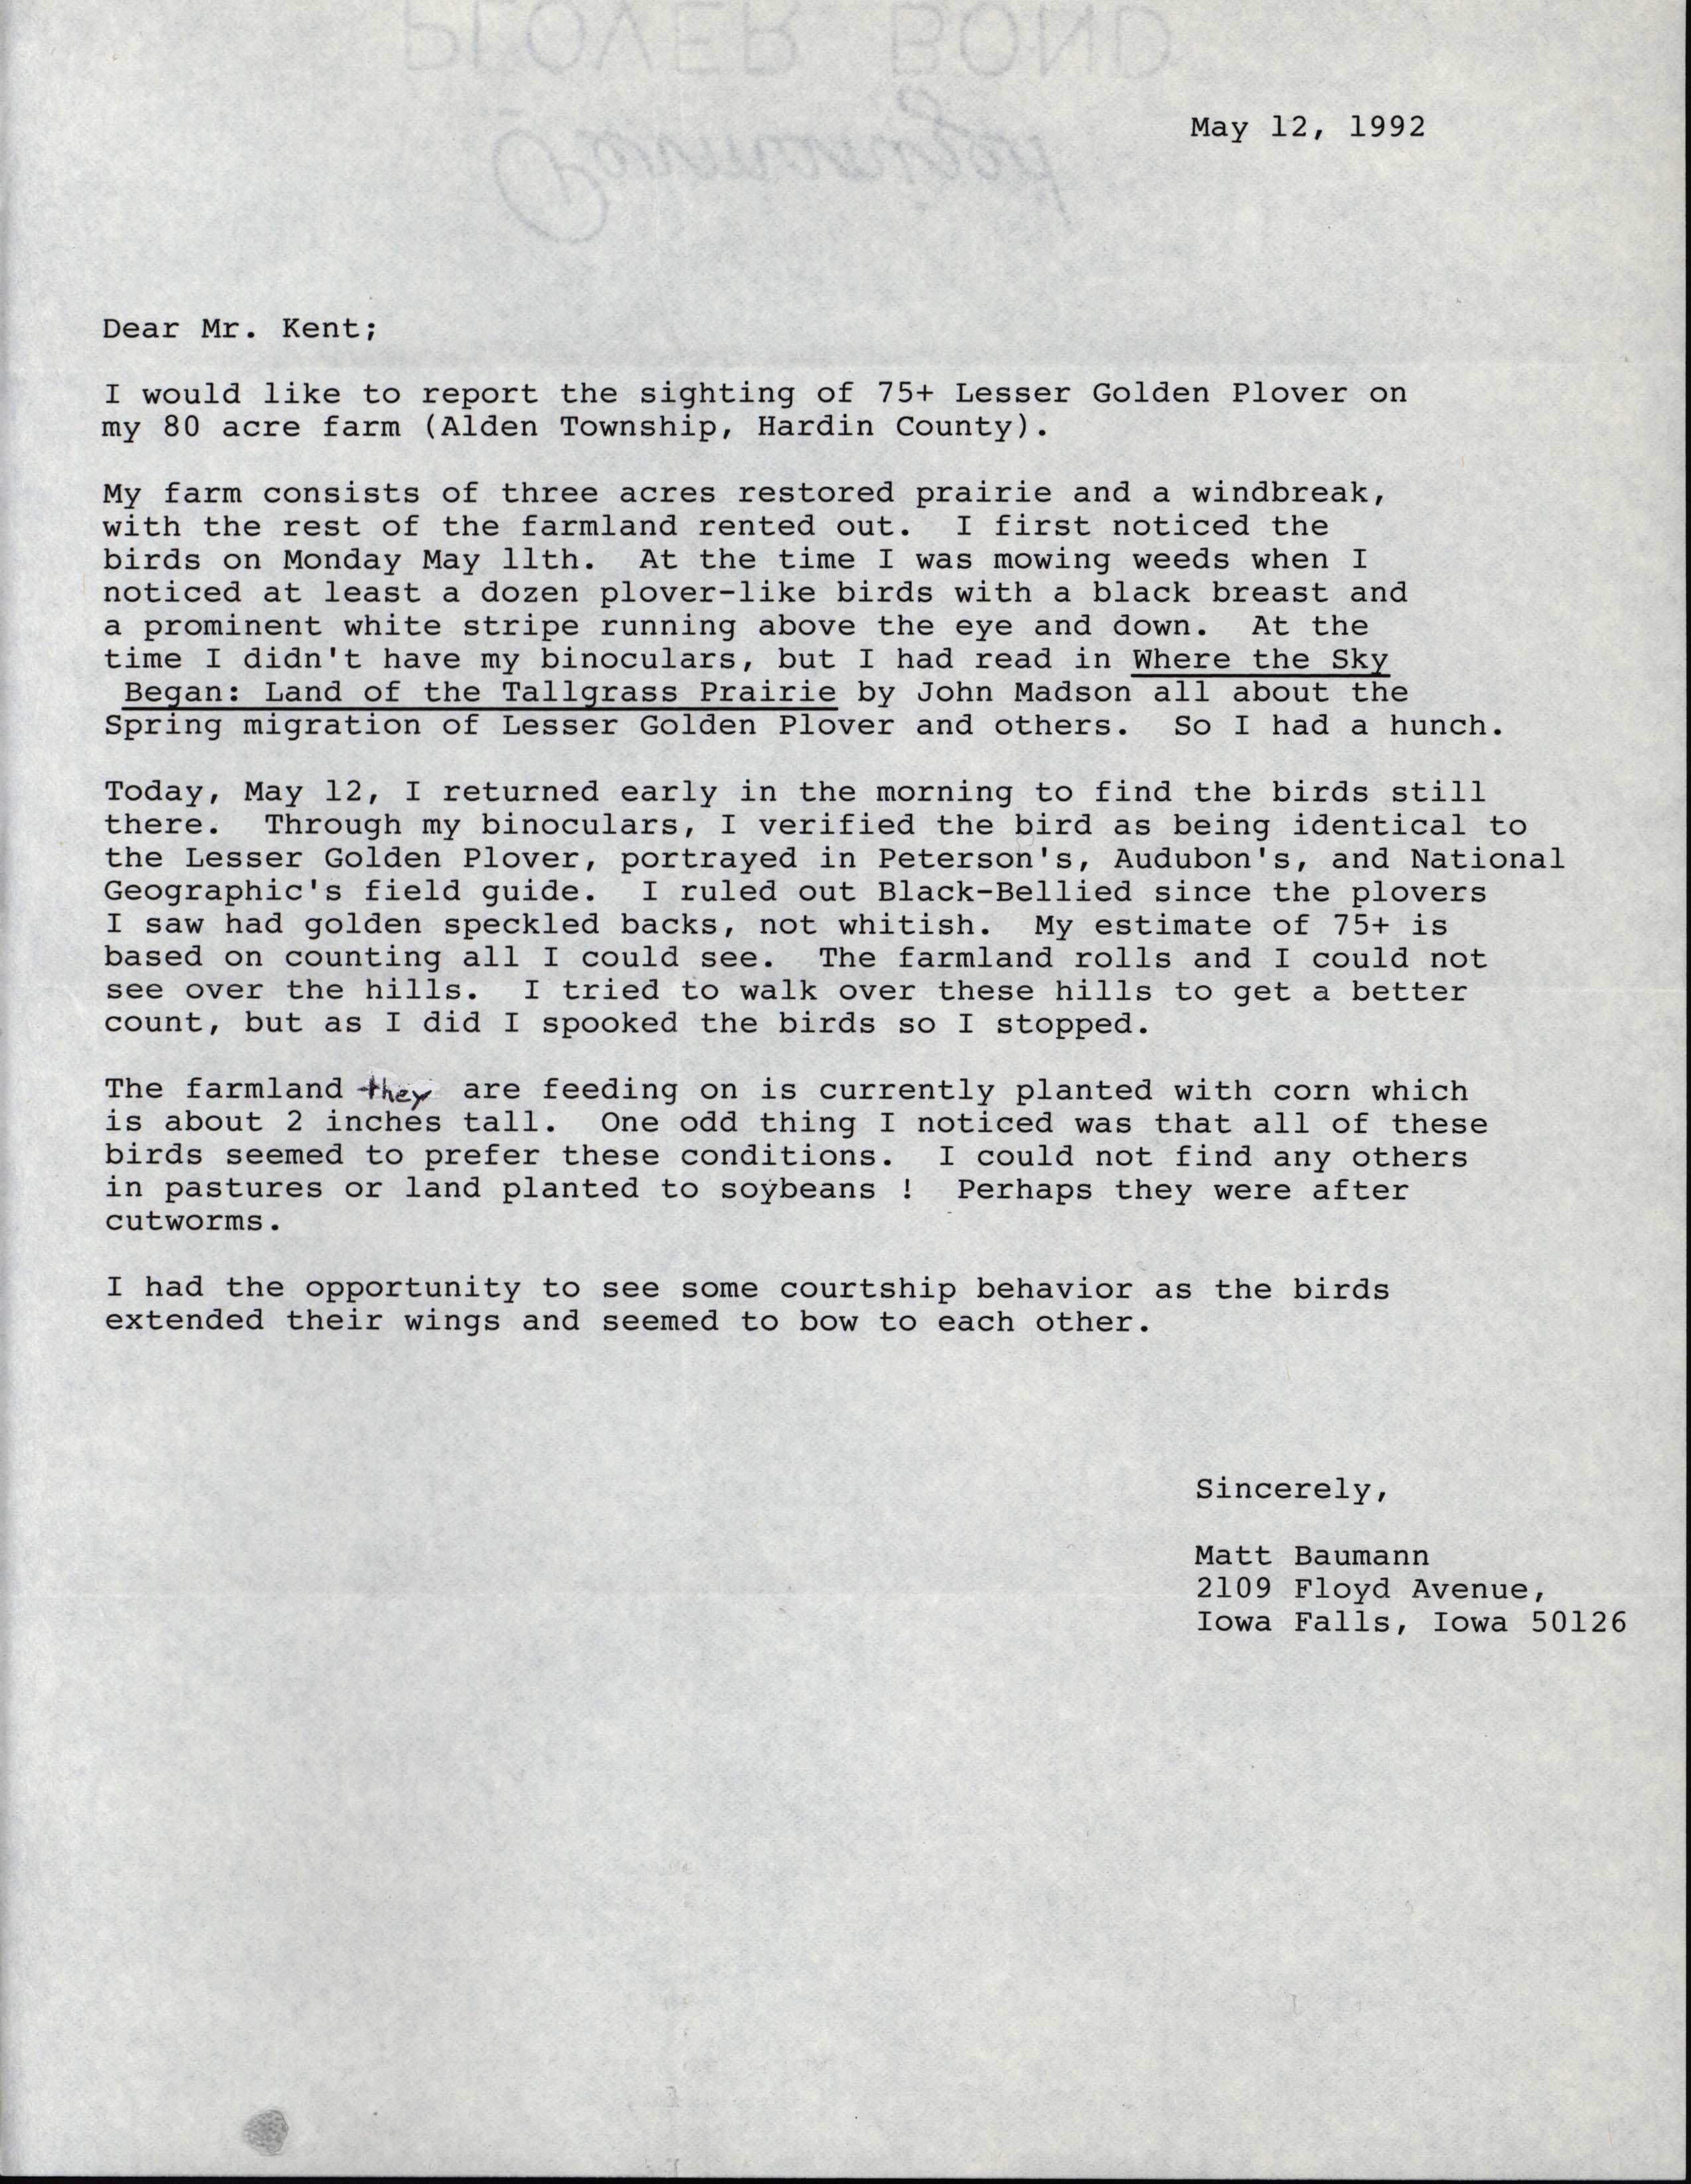 Matt Baumann letter to Thomas H. Kent regarding bird sightings, May 12, 1992